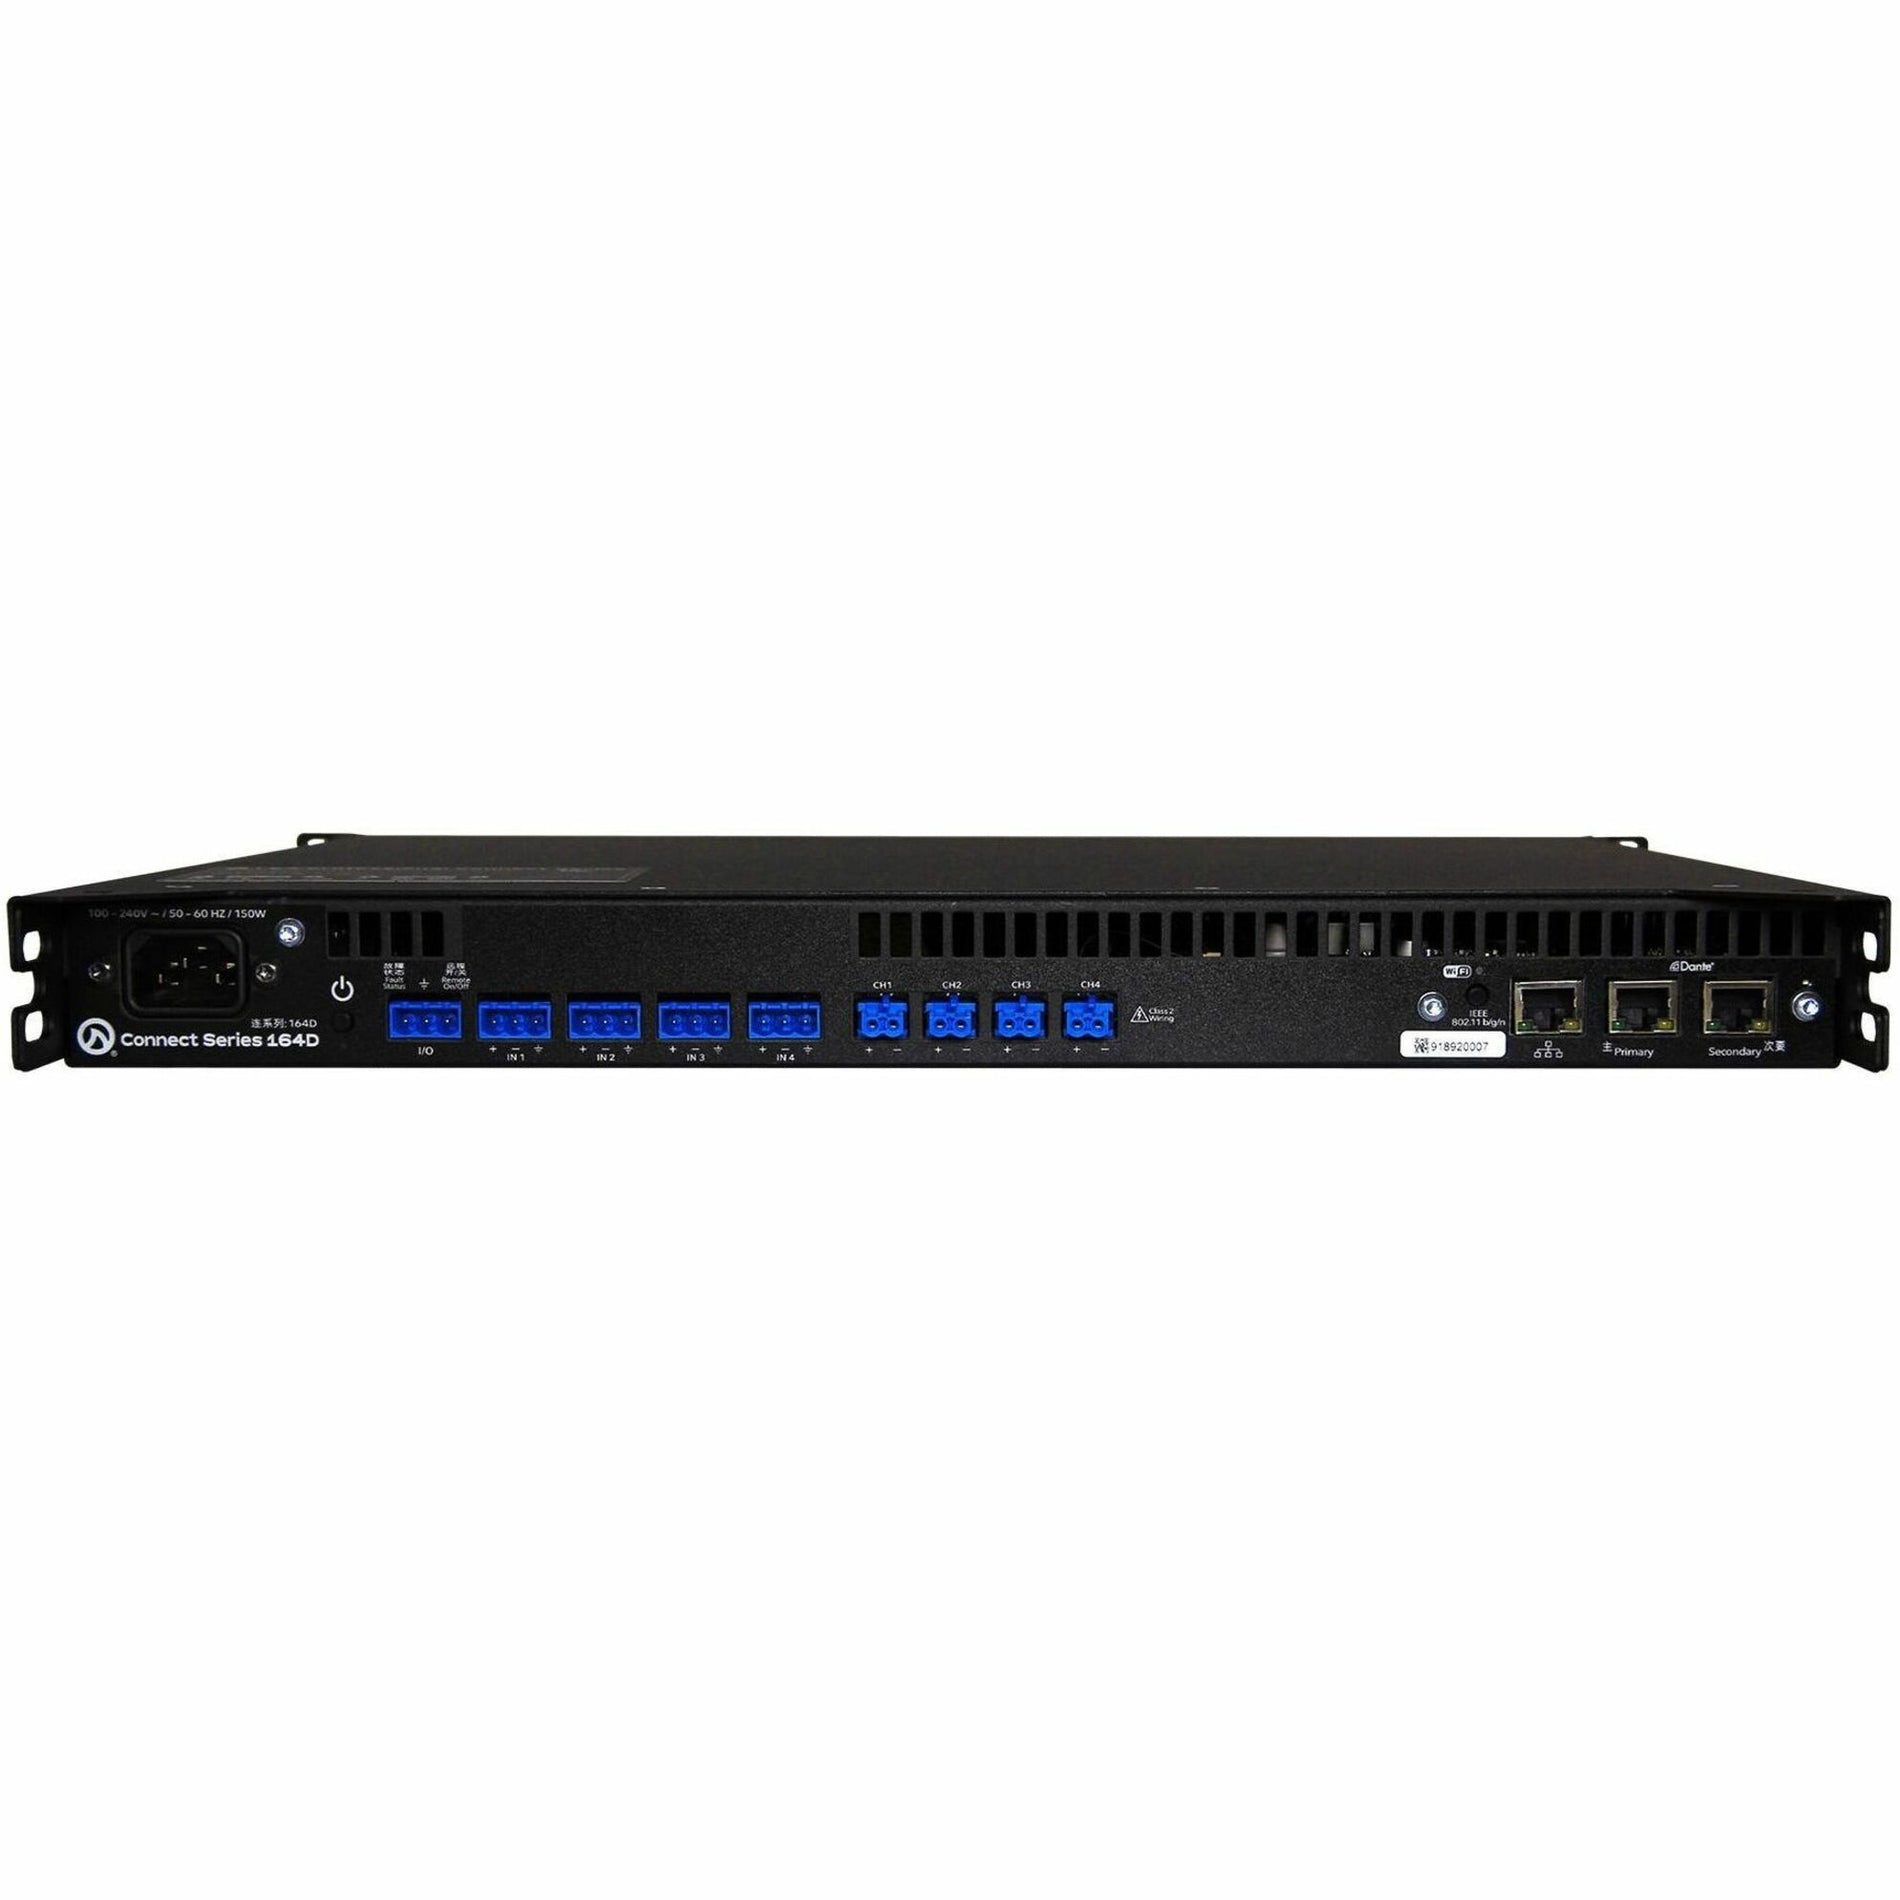 LEA Professional CONNECTSERIES 164D Verstärker - 640W RMS 4 Kanal Rack Mount